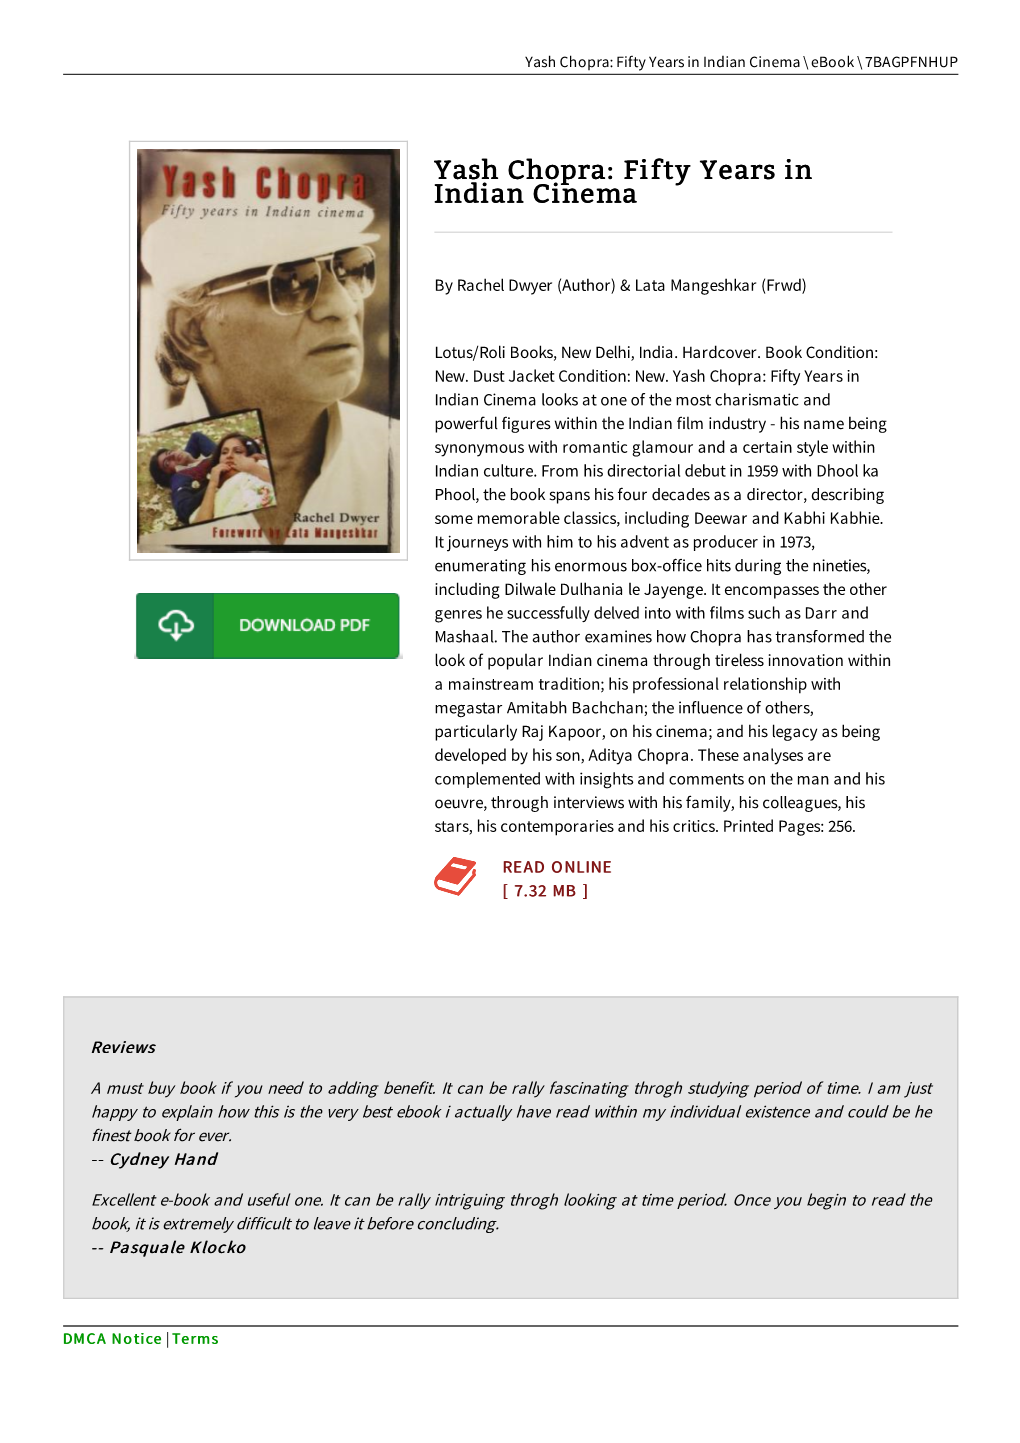 Book / Yash Chopra: Fifty Years in Indian Cinema » Read